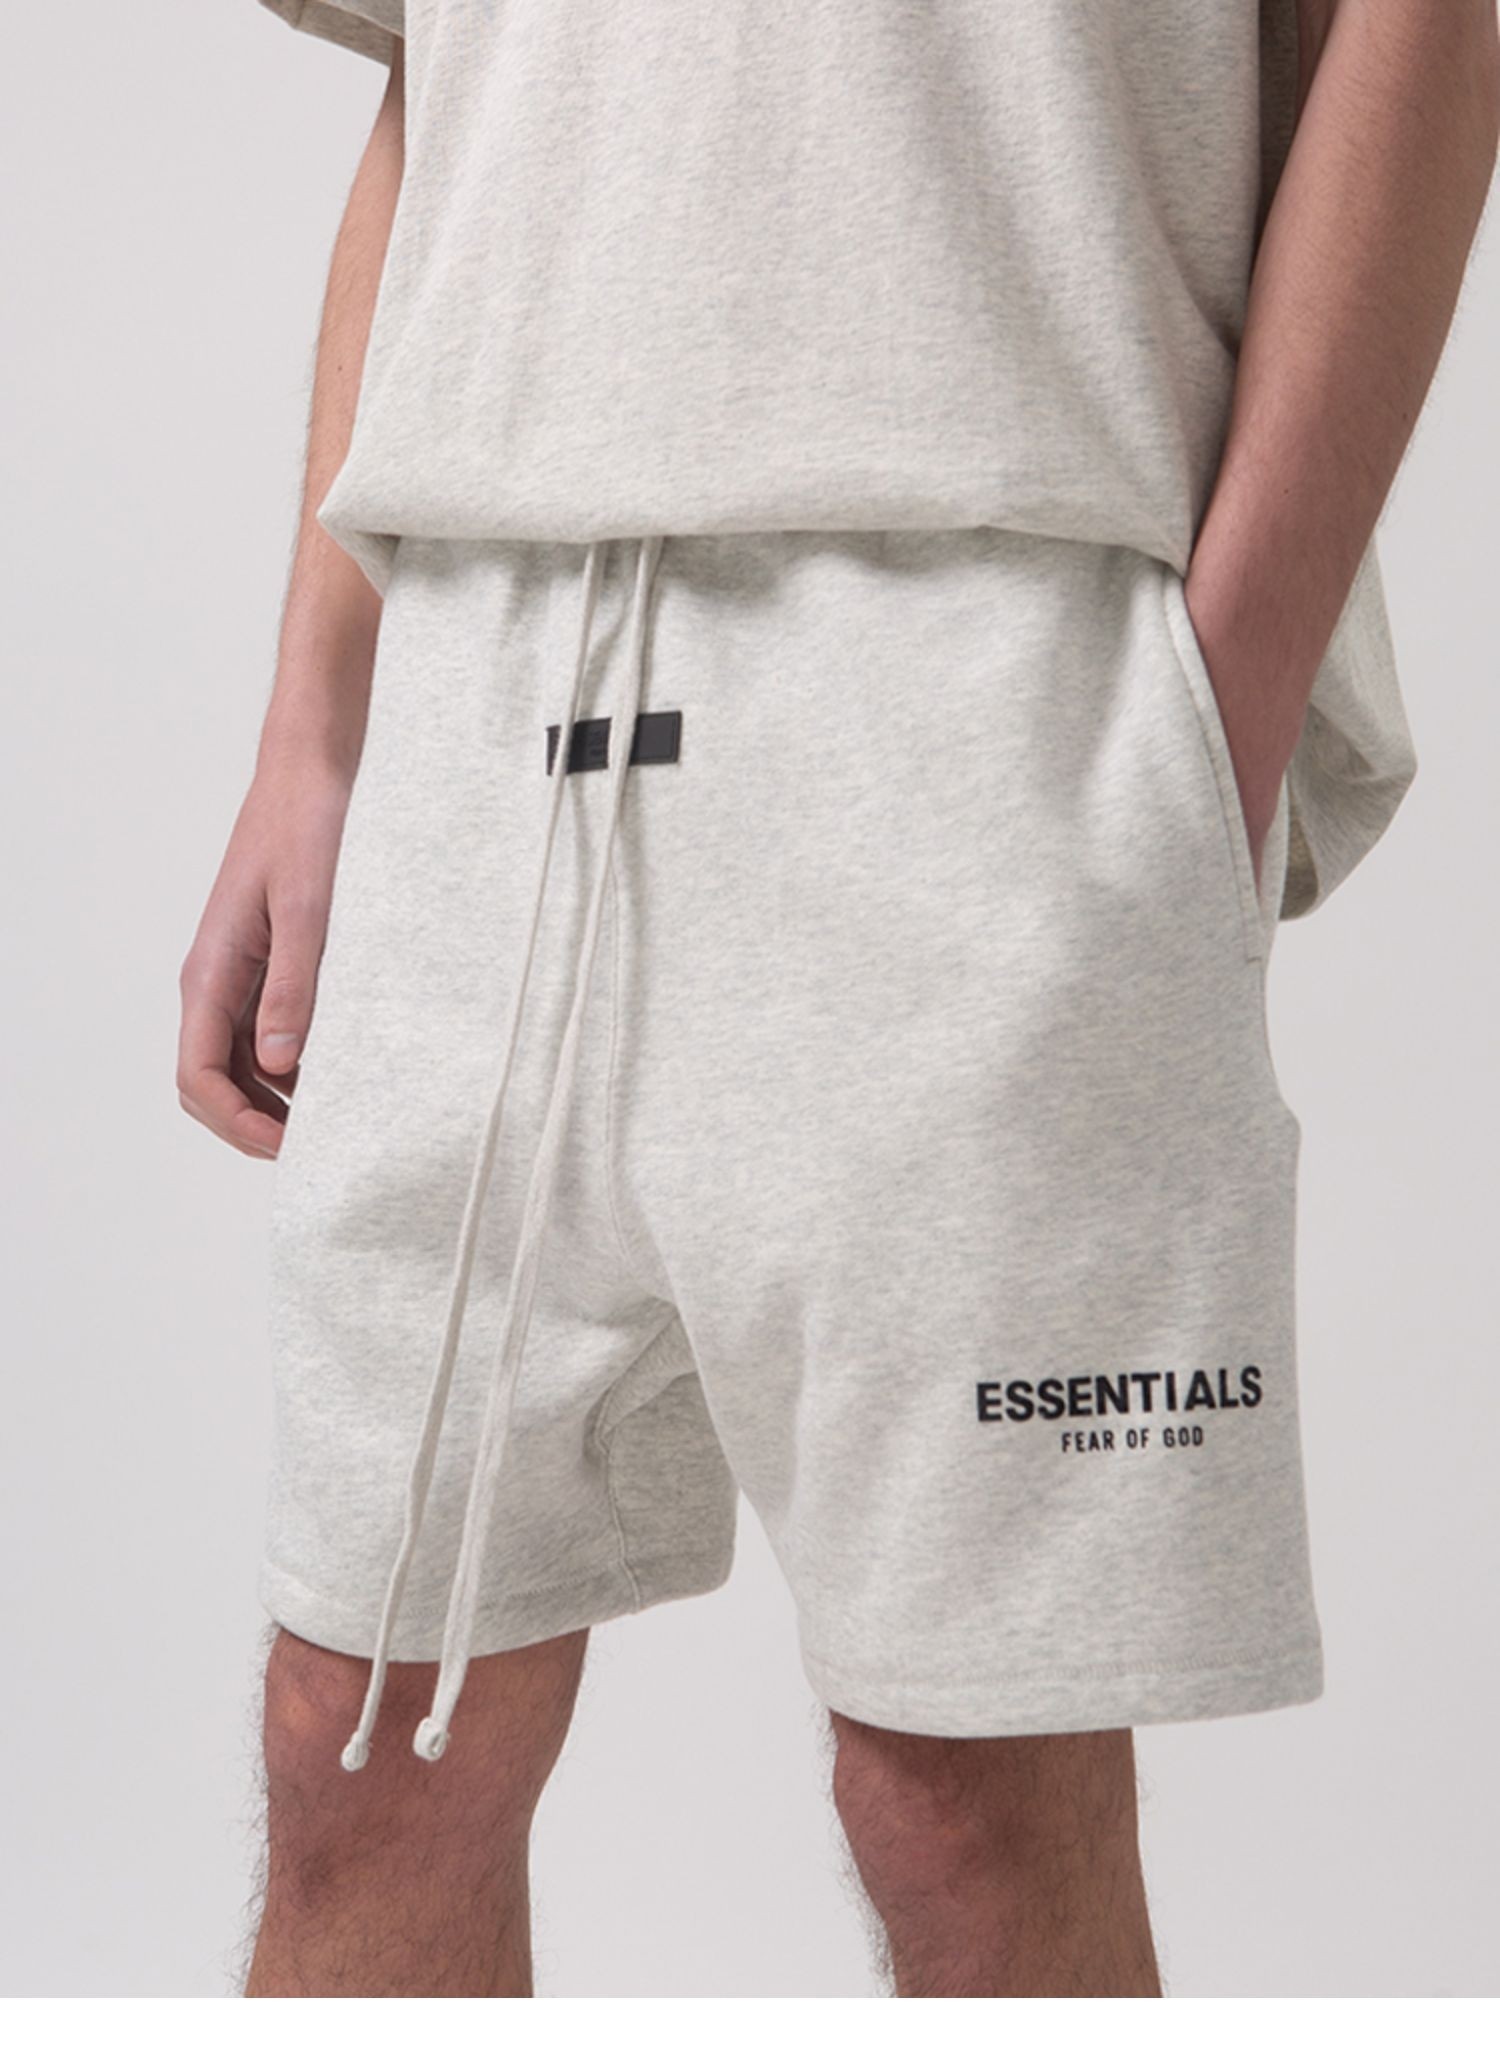 Essentials Men's Cotton Shorts